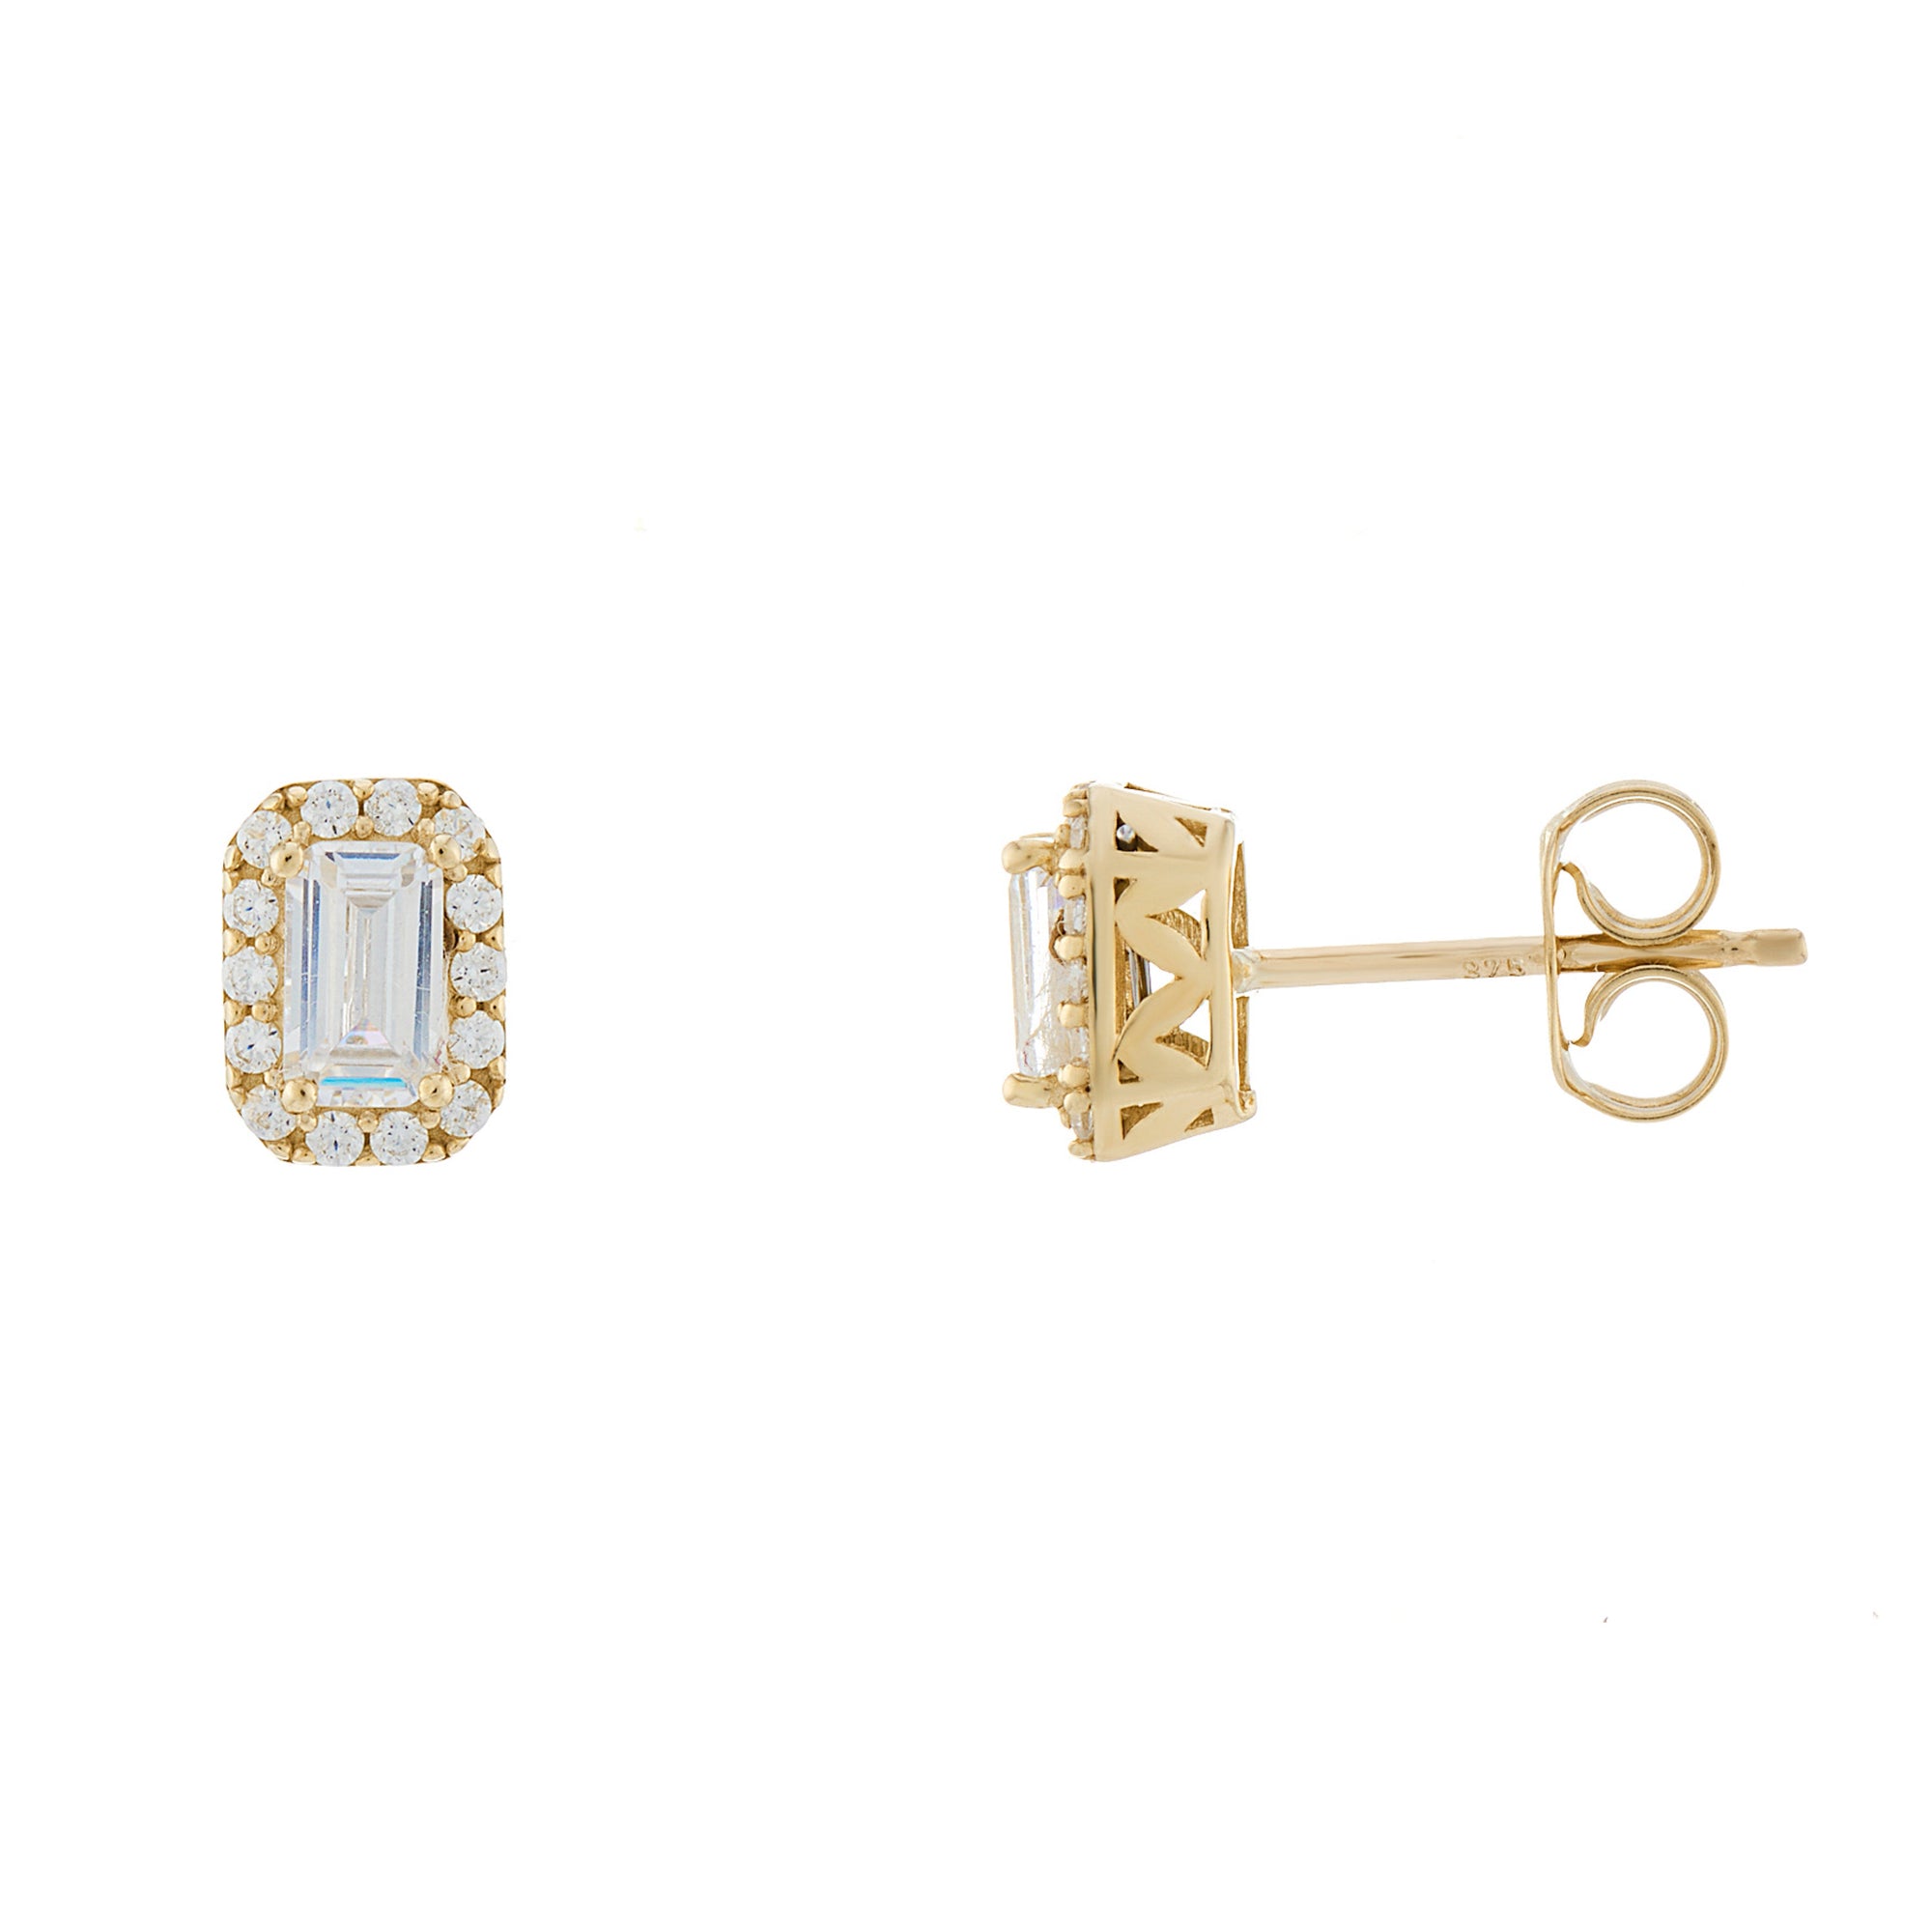 9ct gold rectangular cz & cz cluster stud earrings